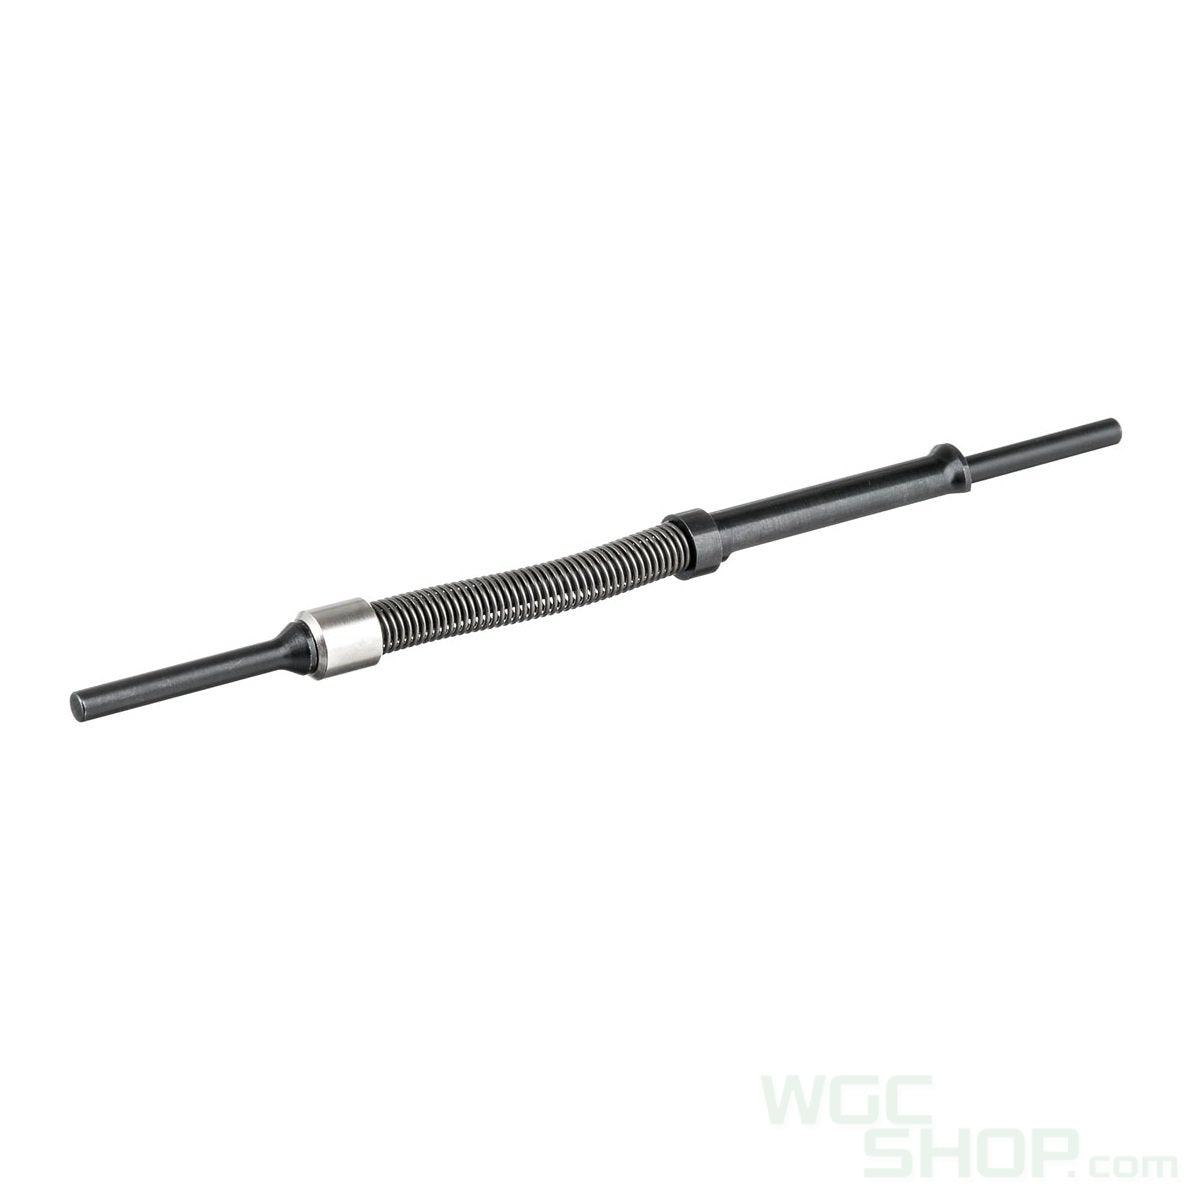 VFC Original Parts - Steel Piston Guide Assembly for HK416D GBB Rifle ( VG23PIS001 ) - WGC Shop